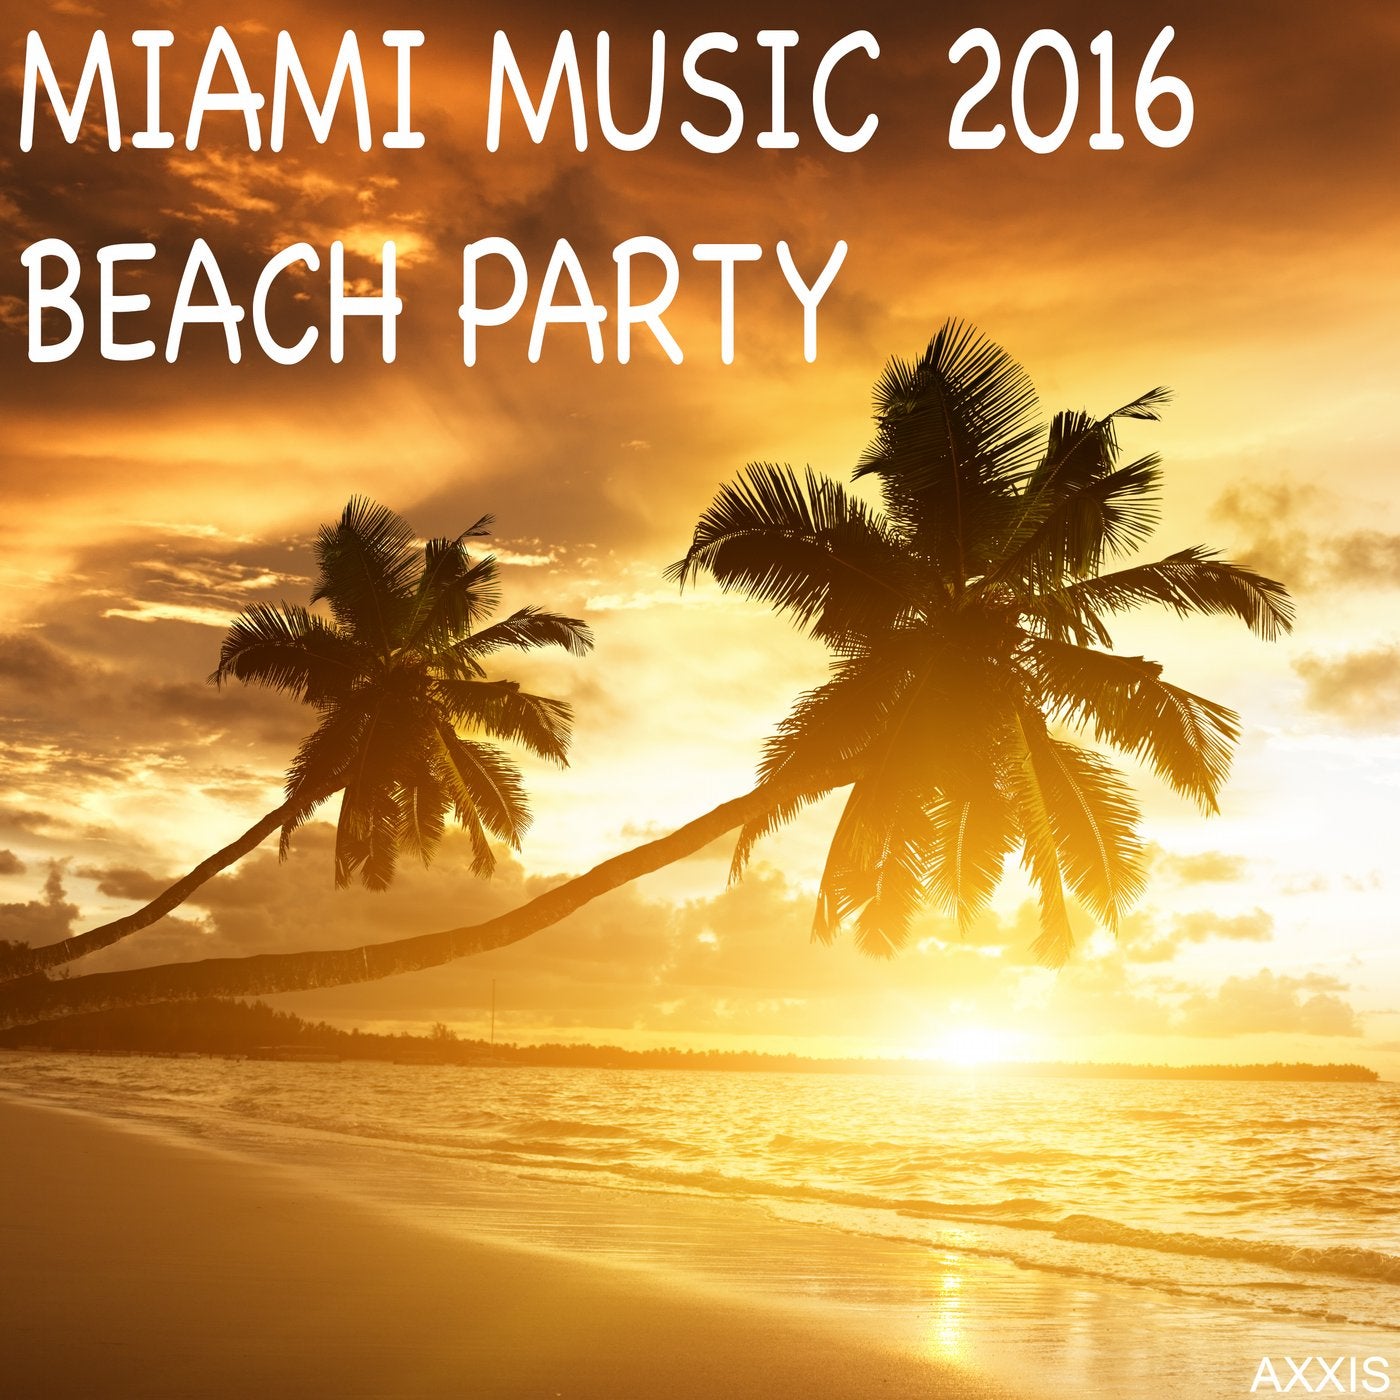 Miami Music 2016 Beach Party